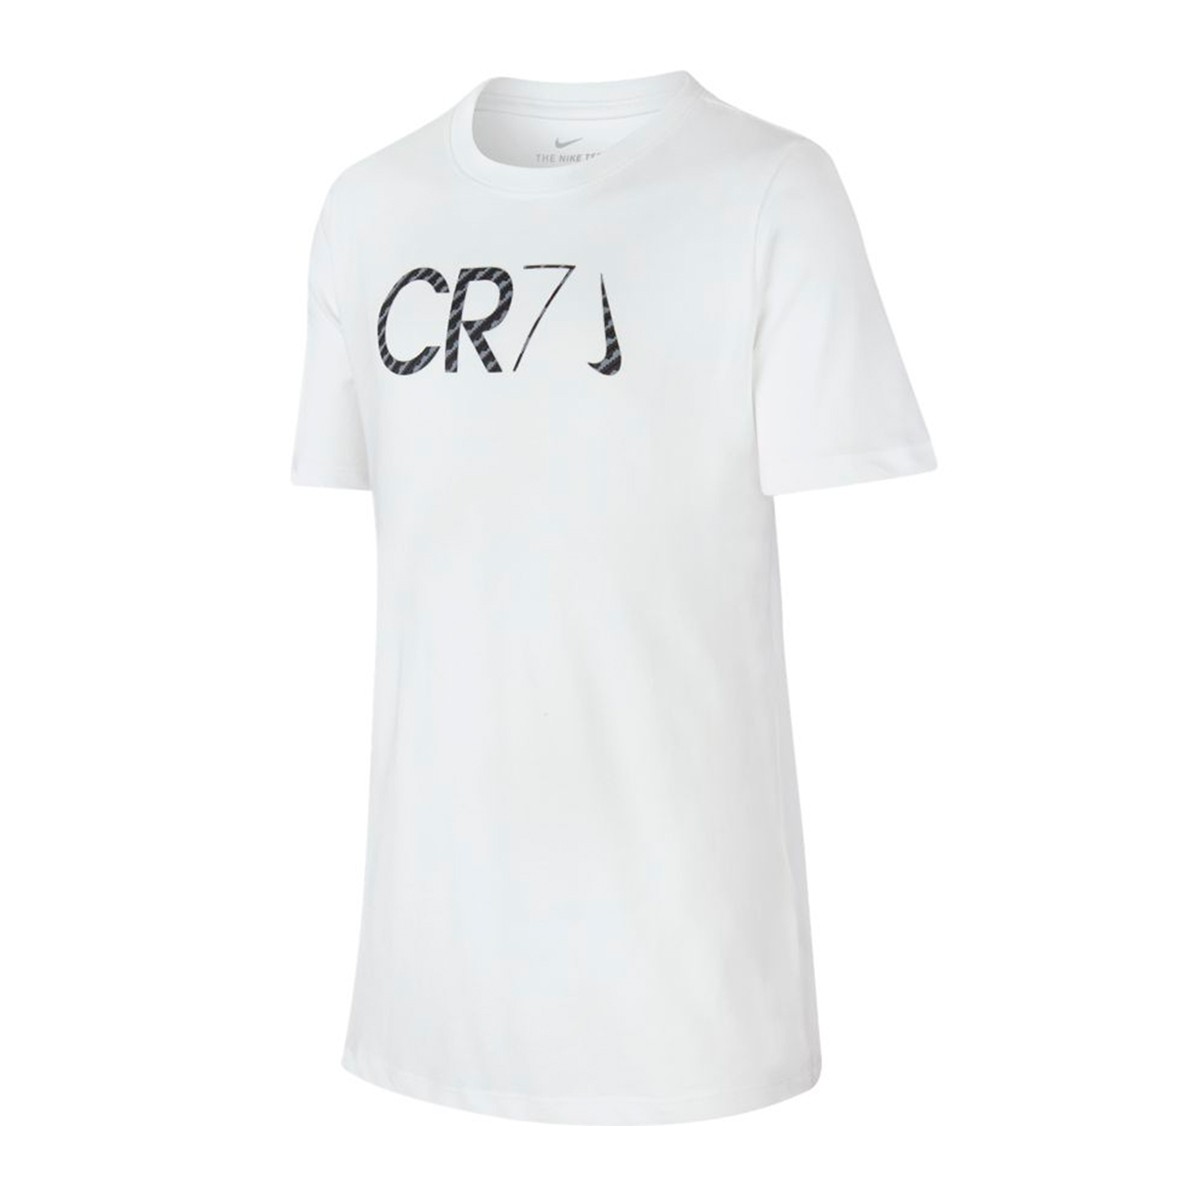 camiseta nike cr7